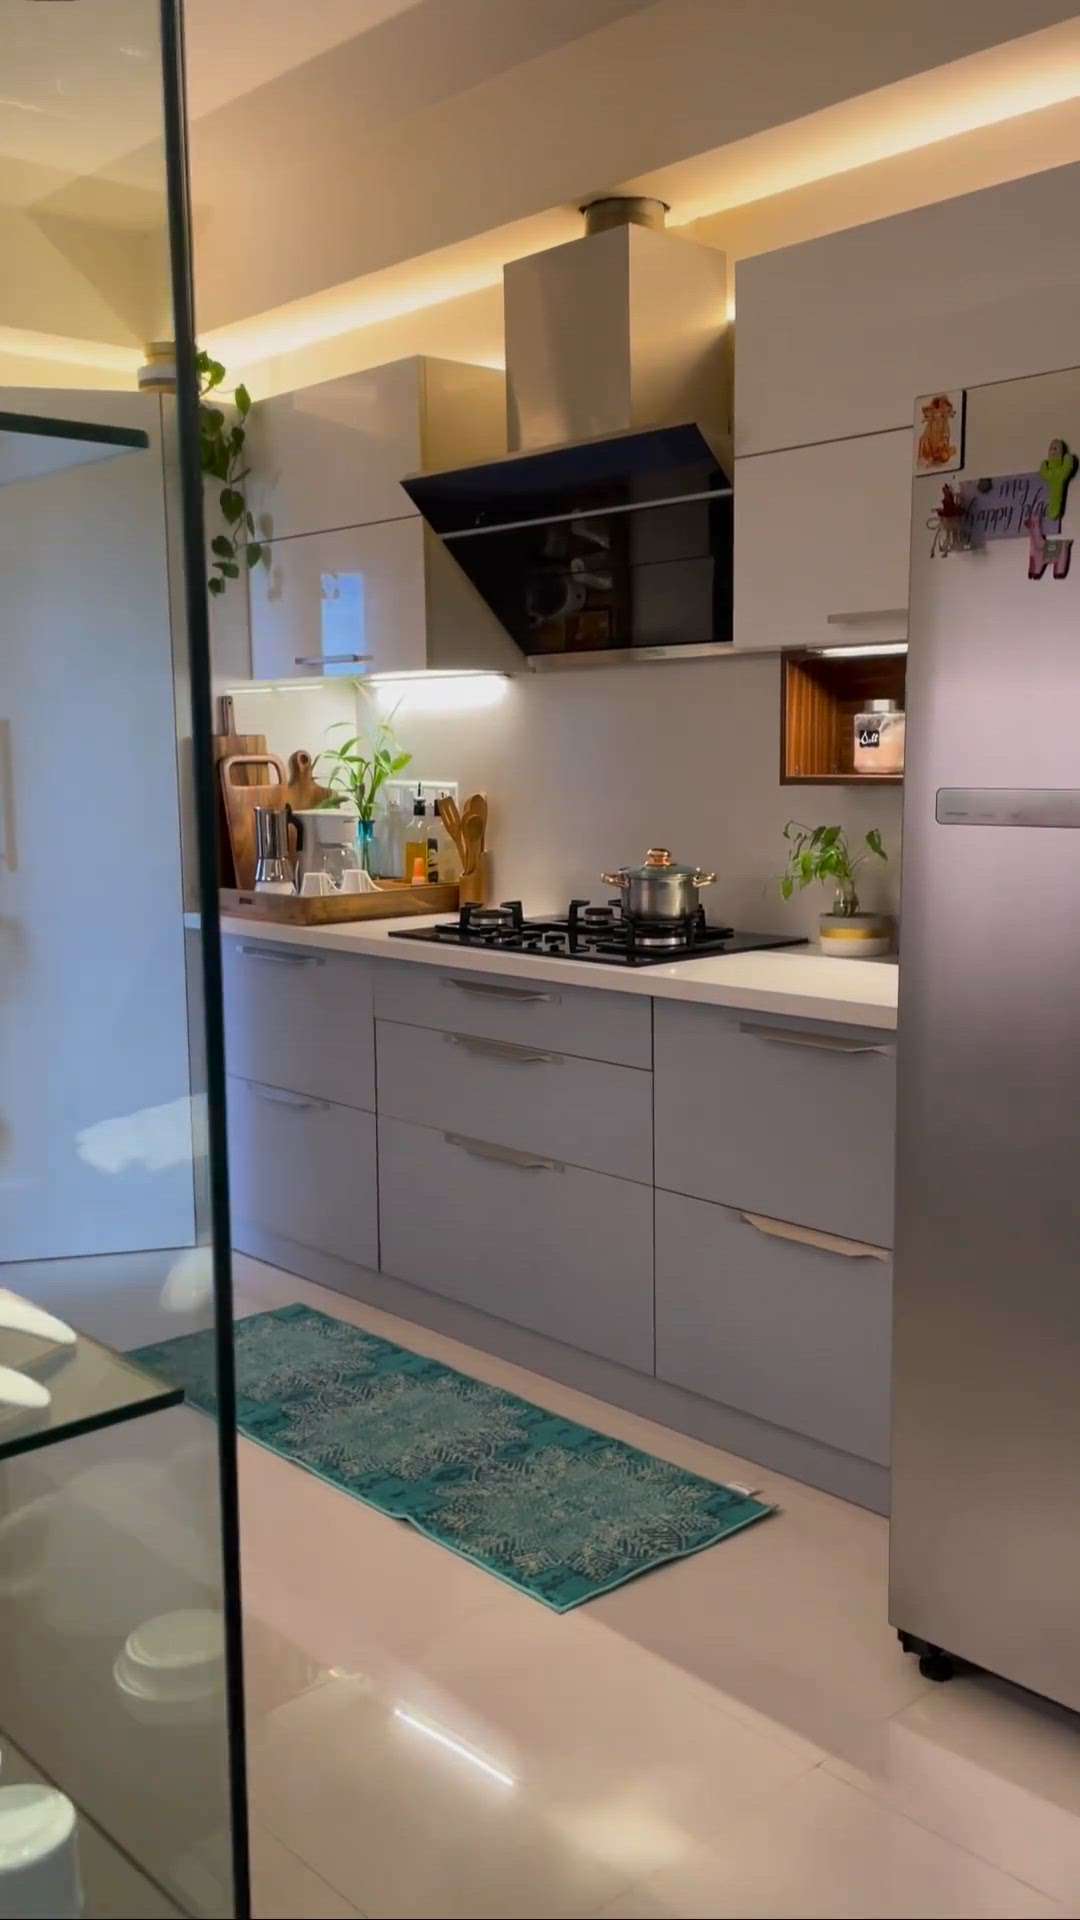 Minimalist Modern kitchen latest design by Majestic modular kitchens Pvt Ltd.
#modularkitchendesign
#LShapeKitchen
#faridabad
#palwal
#hodal
#gurgaon
#kitchenmanufecturer
#kitchenmakeover
#kitchenmanufacturer
#ACRYLICKITCHEN
#HIGHGLOSSKITCHEN
#STAINLESSSTEELKITCHENS
#livspacefaridabad
#livspace
#modular_kitchen
#latestkitchendesign
#kitchendesign
#ModularKitchen
#interior_designer_in_faridabad
#palwal
#kitchencabinets
WWW.MAJESTICINTERIORS.CO.IN
9911692170